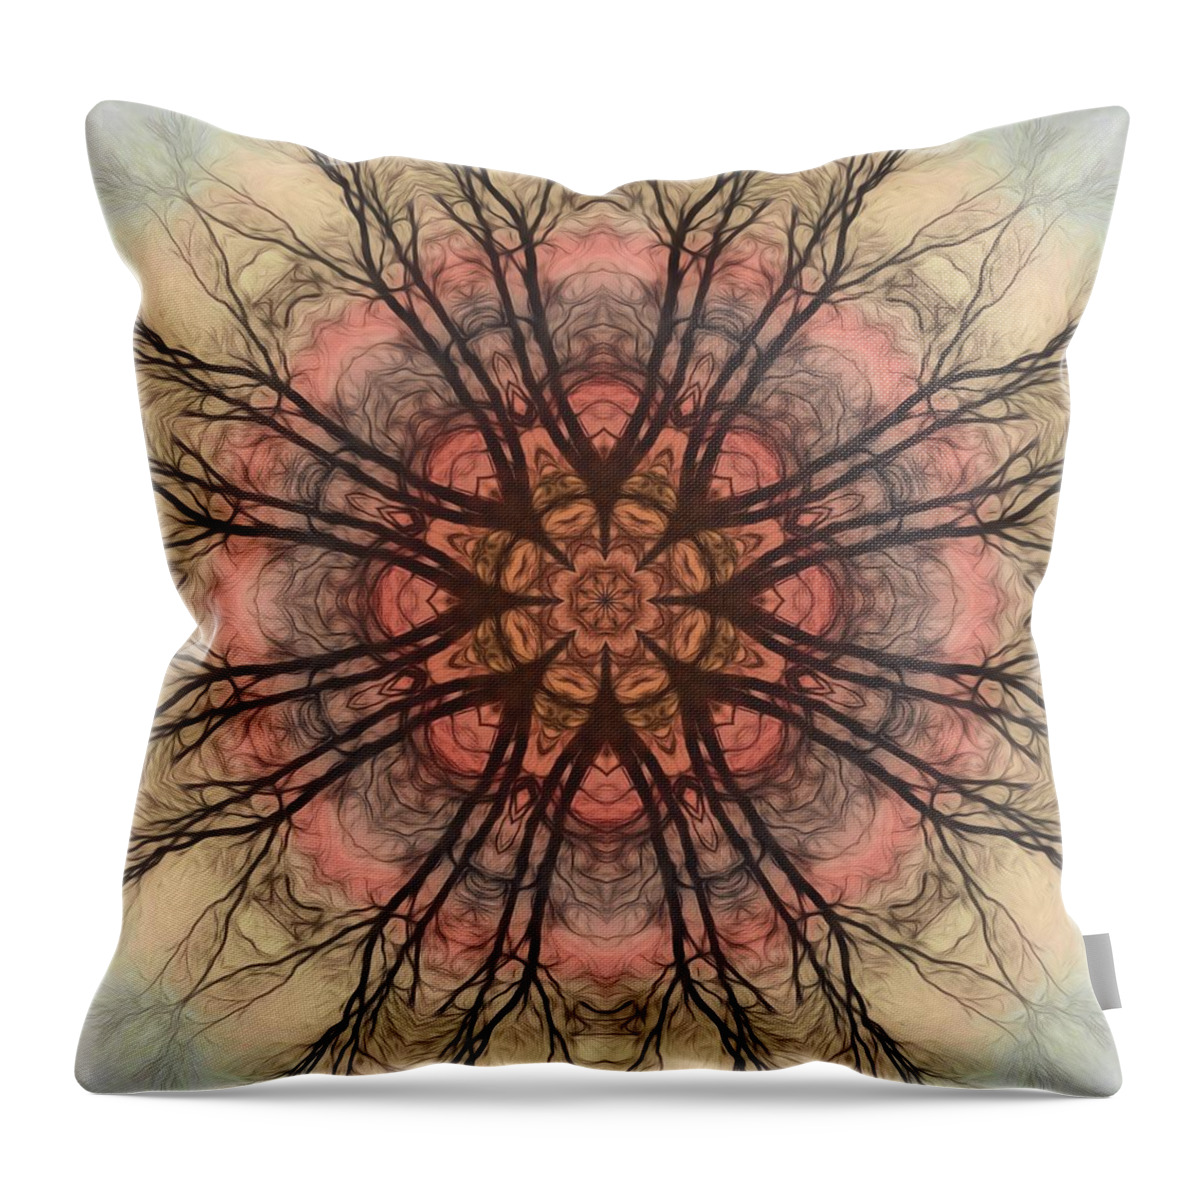 Mandala Throw Pillow featuring the digital art January Sunrise Mandala by Beth Sawickie